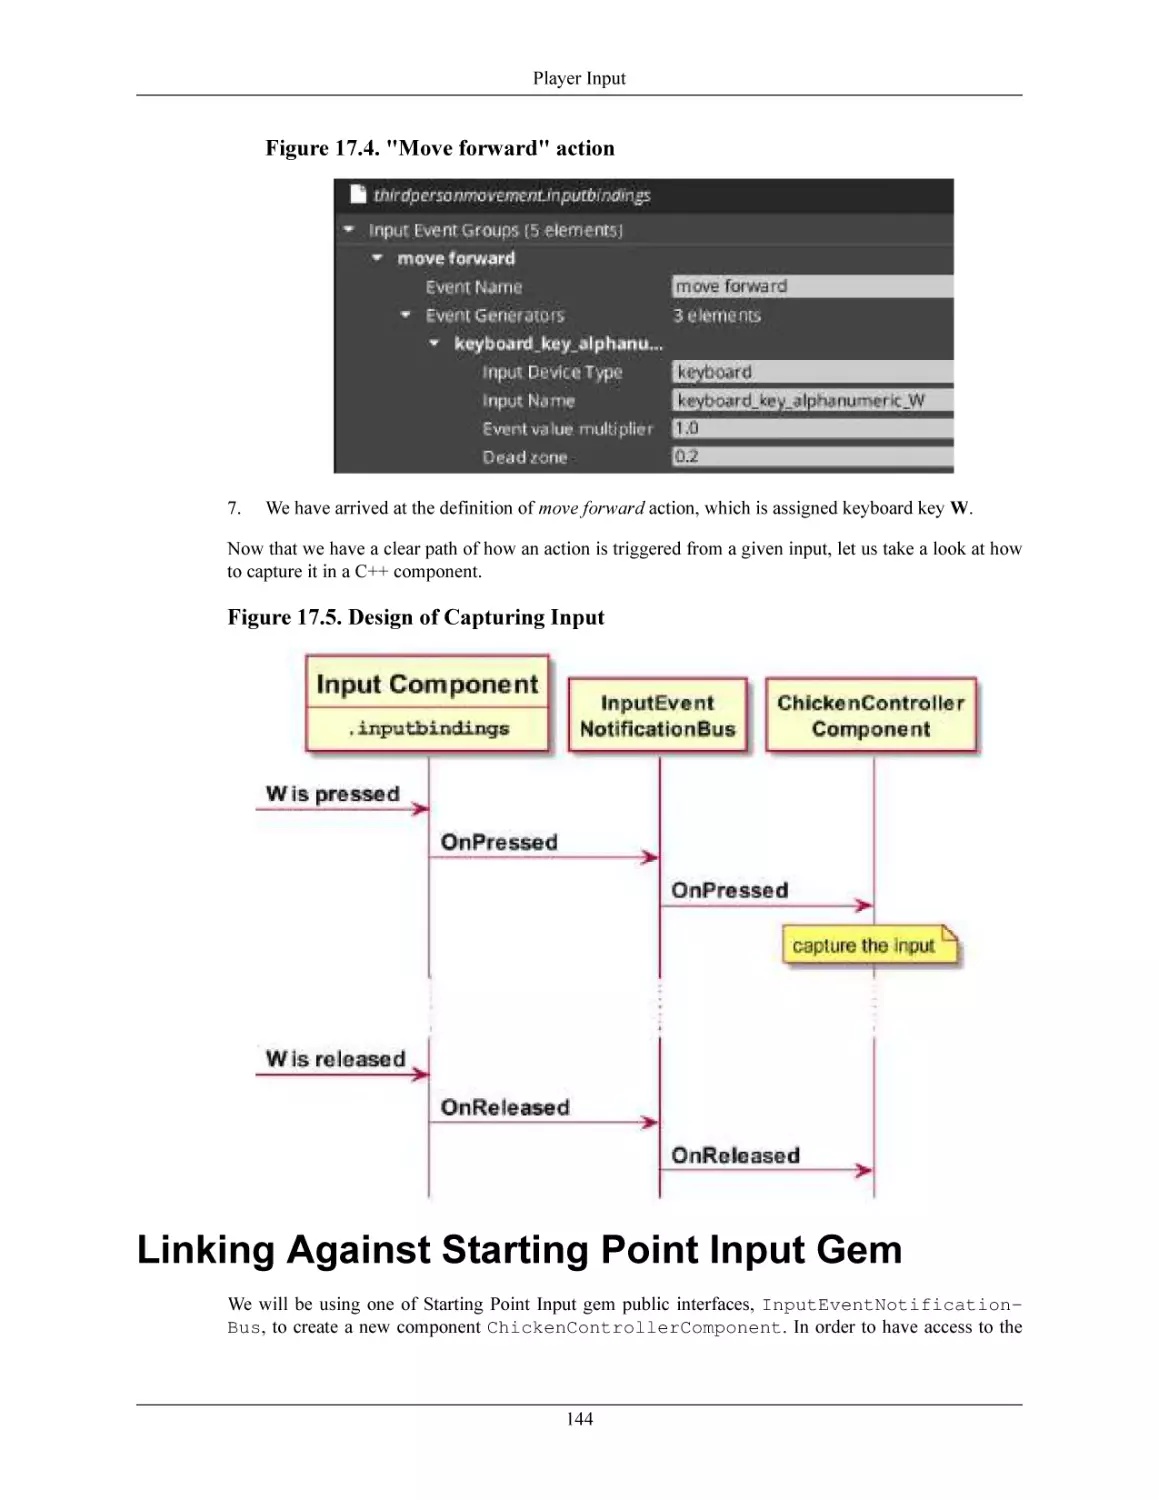 Linking Against Starting Point Input Gem